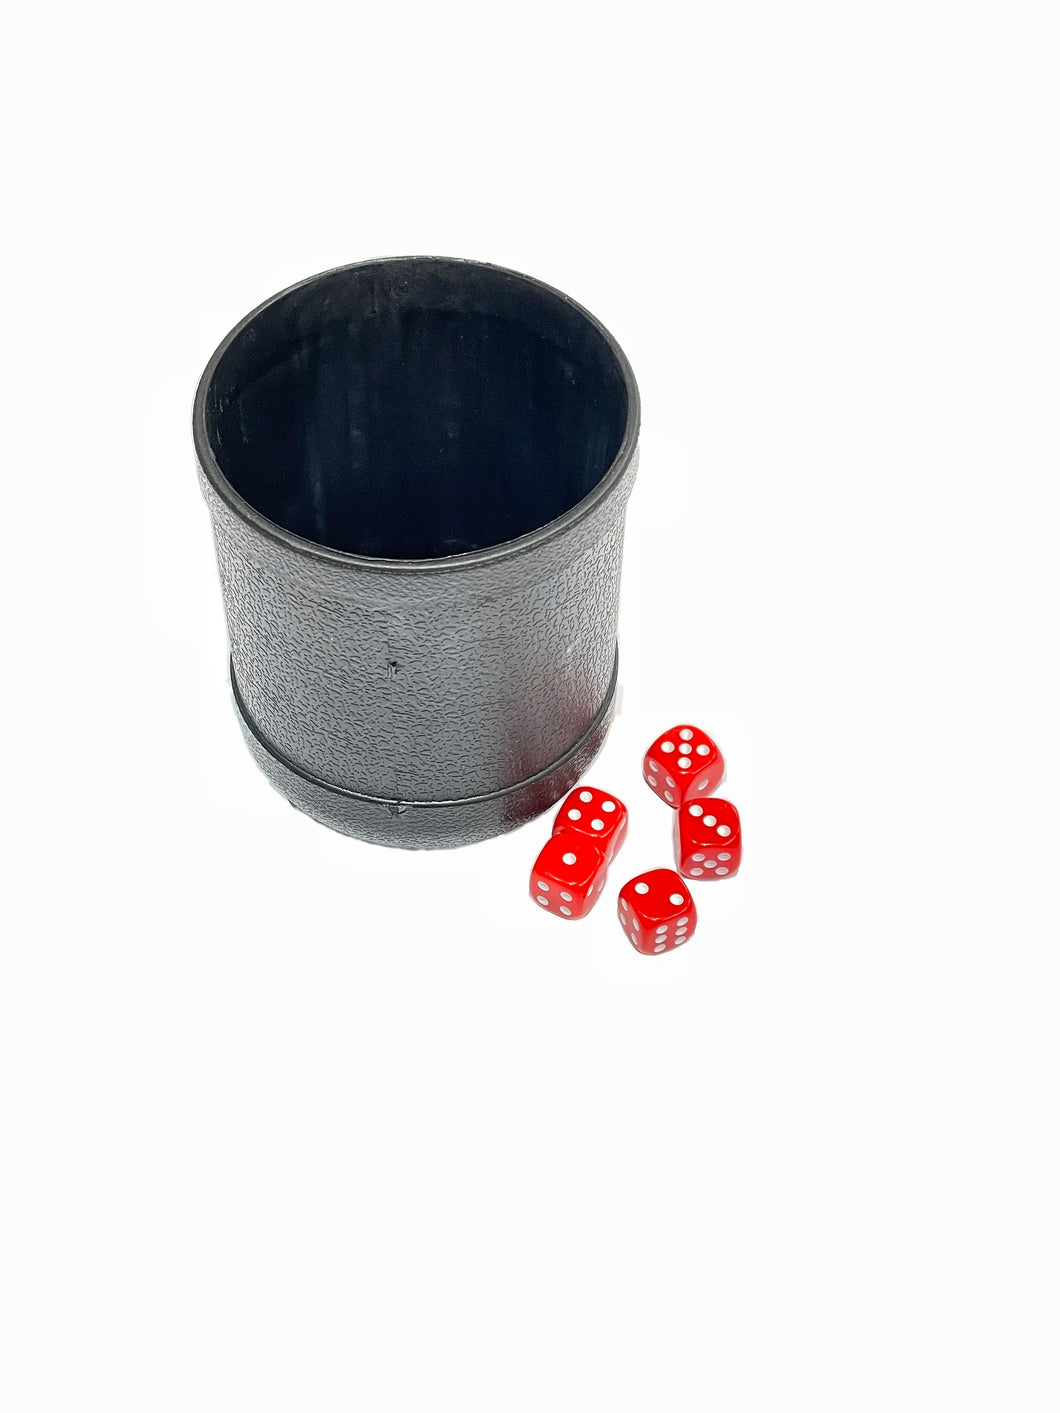 Dice Cup - Black with 5 Dices <br>  黑色骰盅和5顆骰子